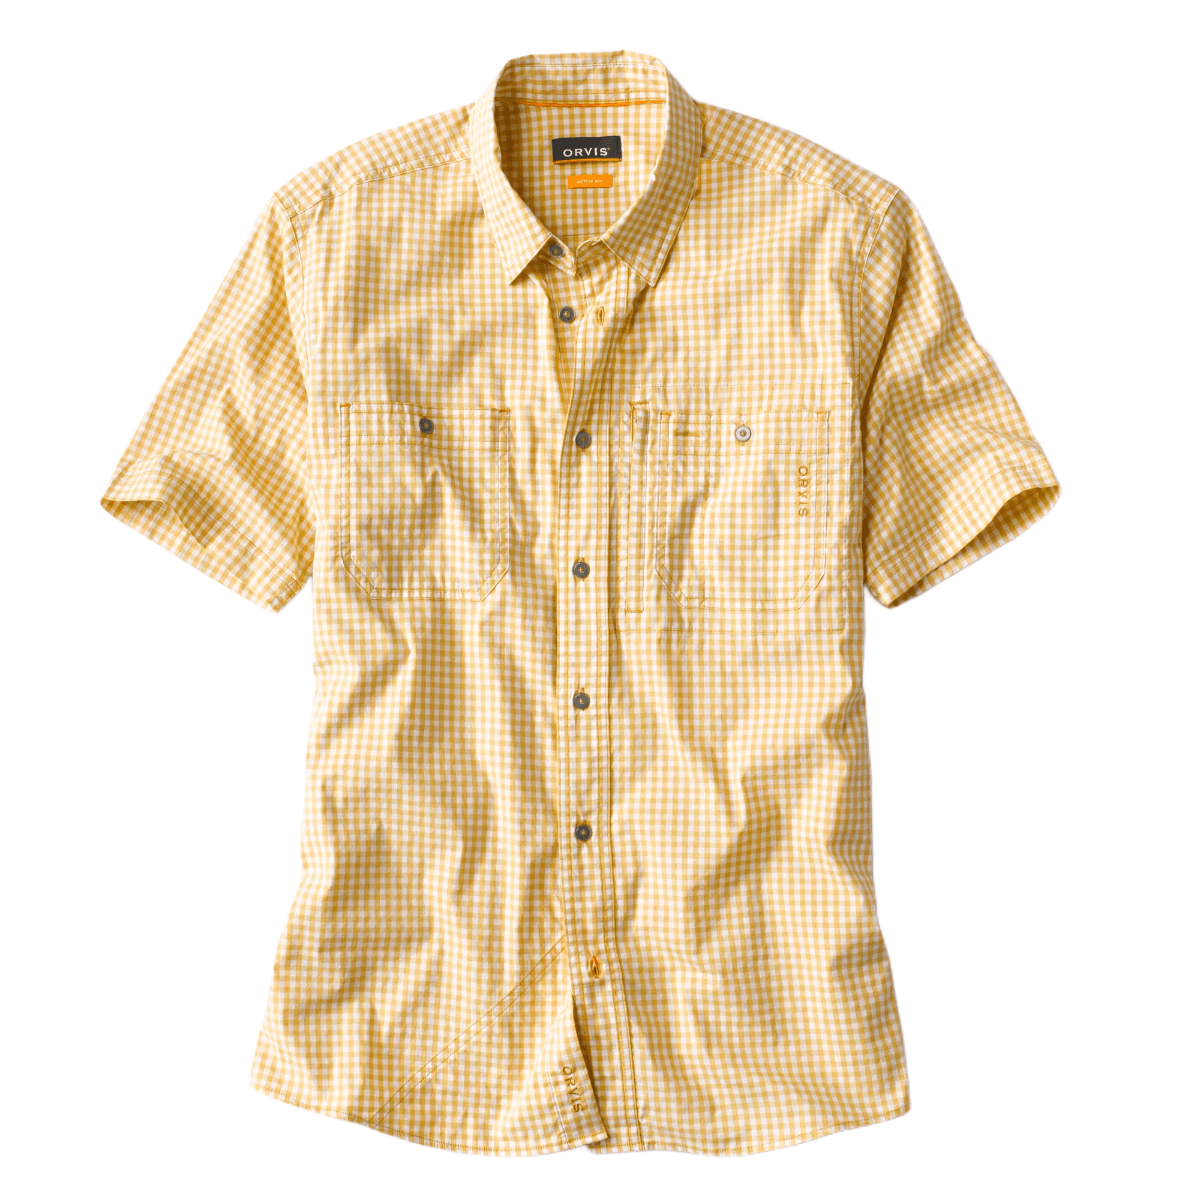 Orvis River Guide Short-Sleeved Shirt - Men's - Als.com